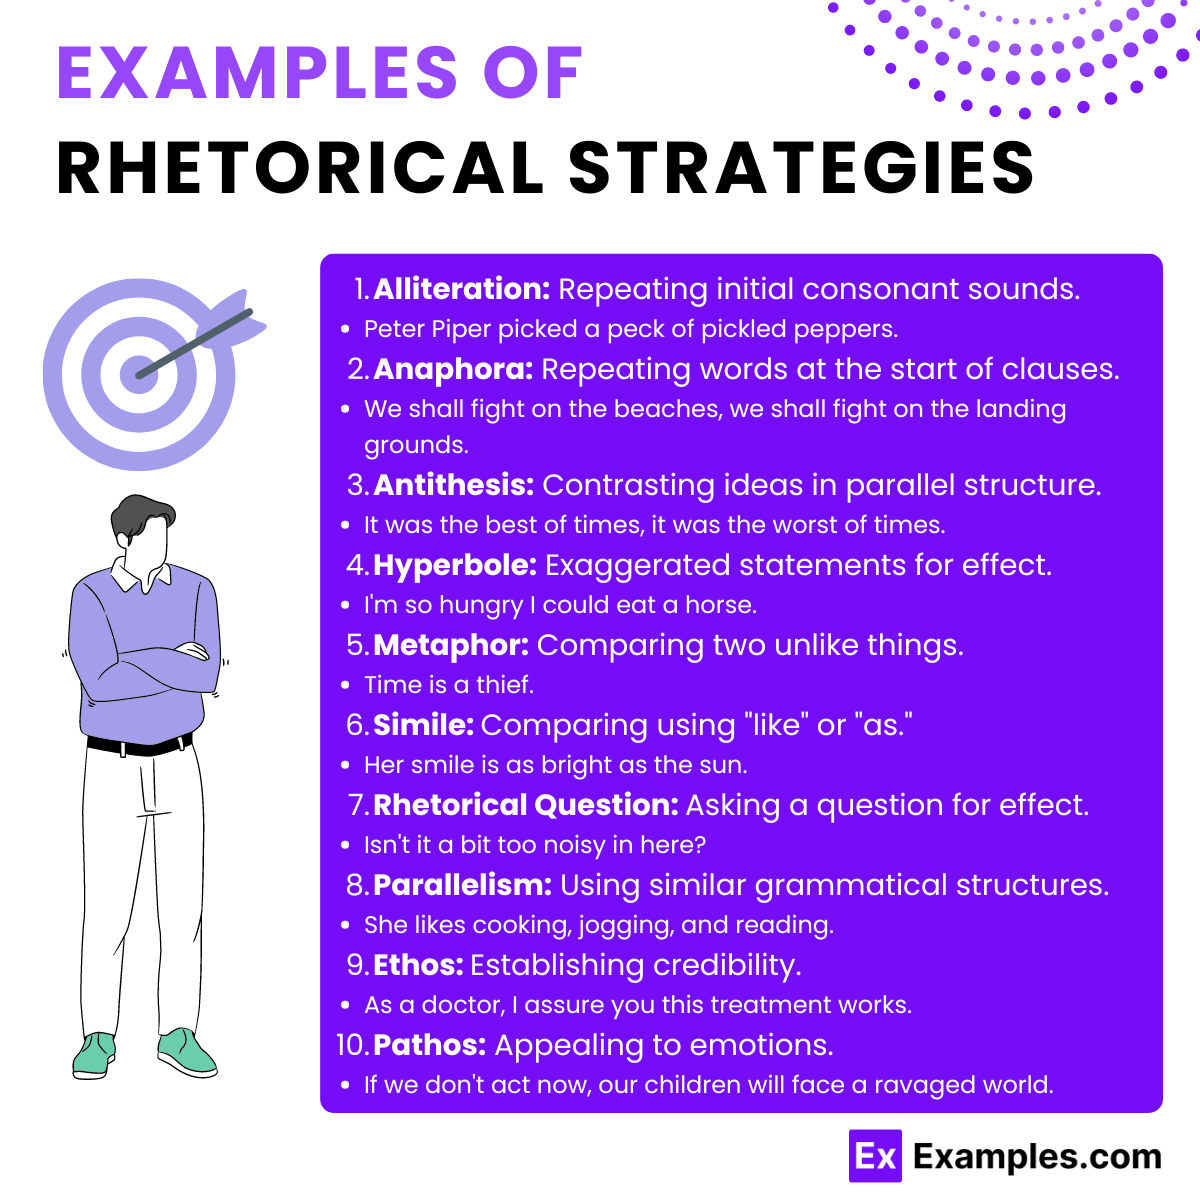 Examples of Rhetorical Strategies